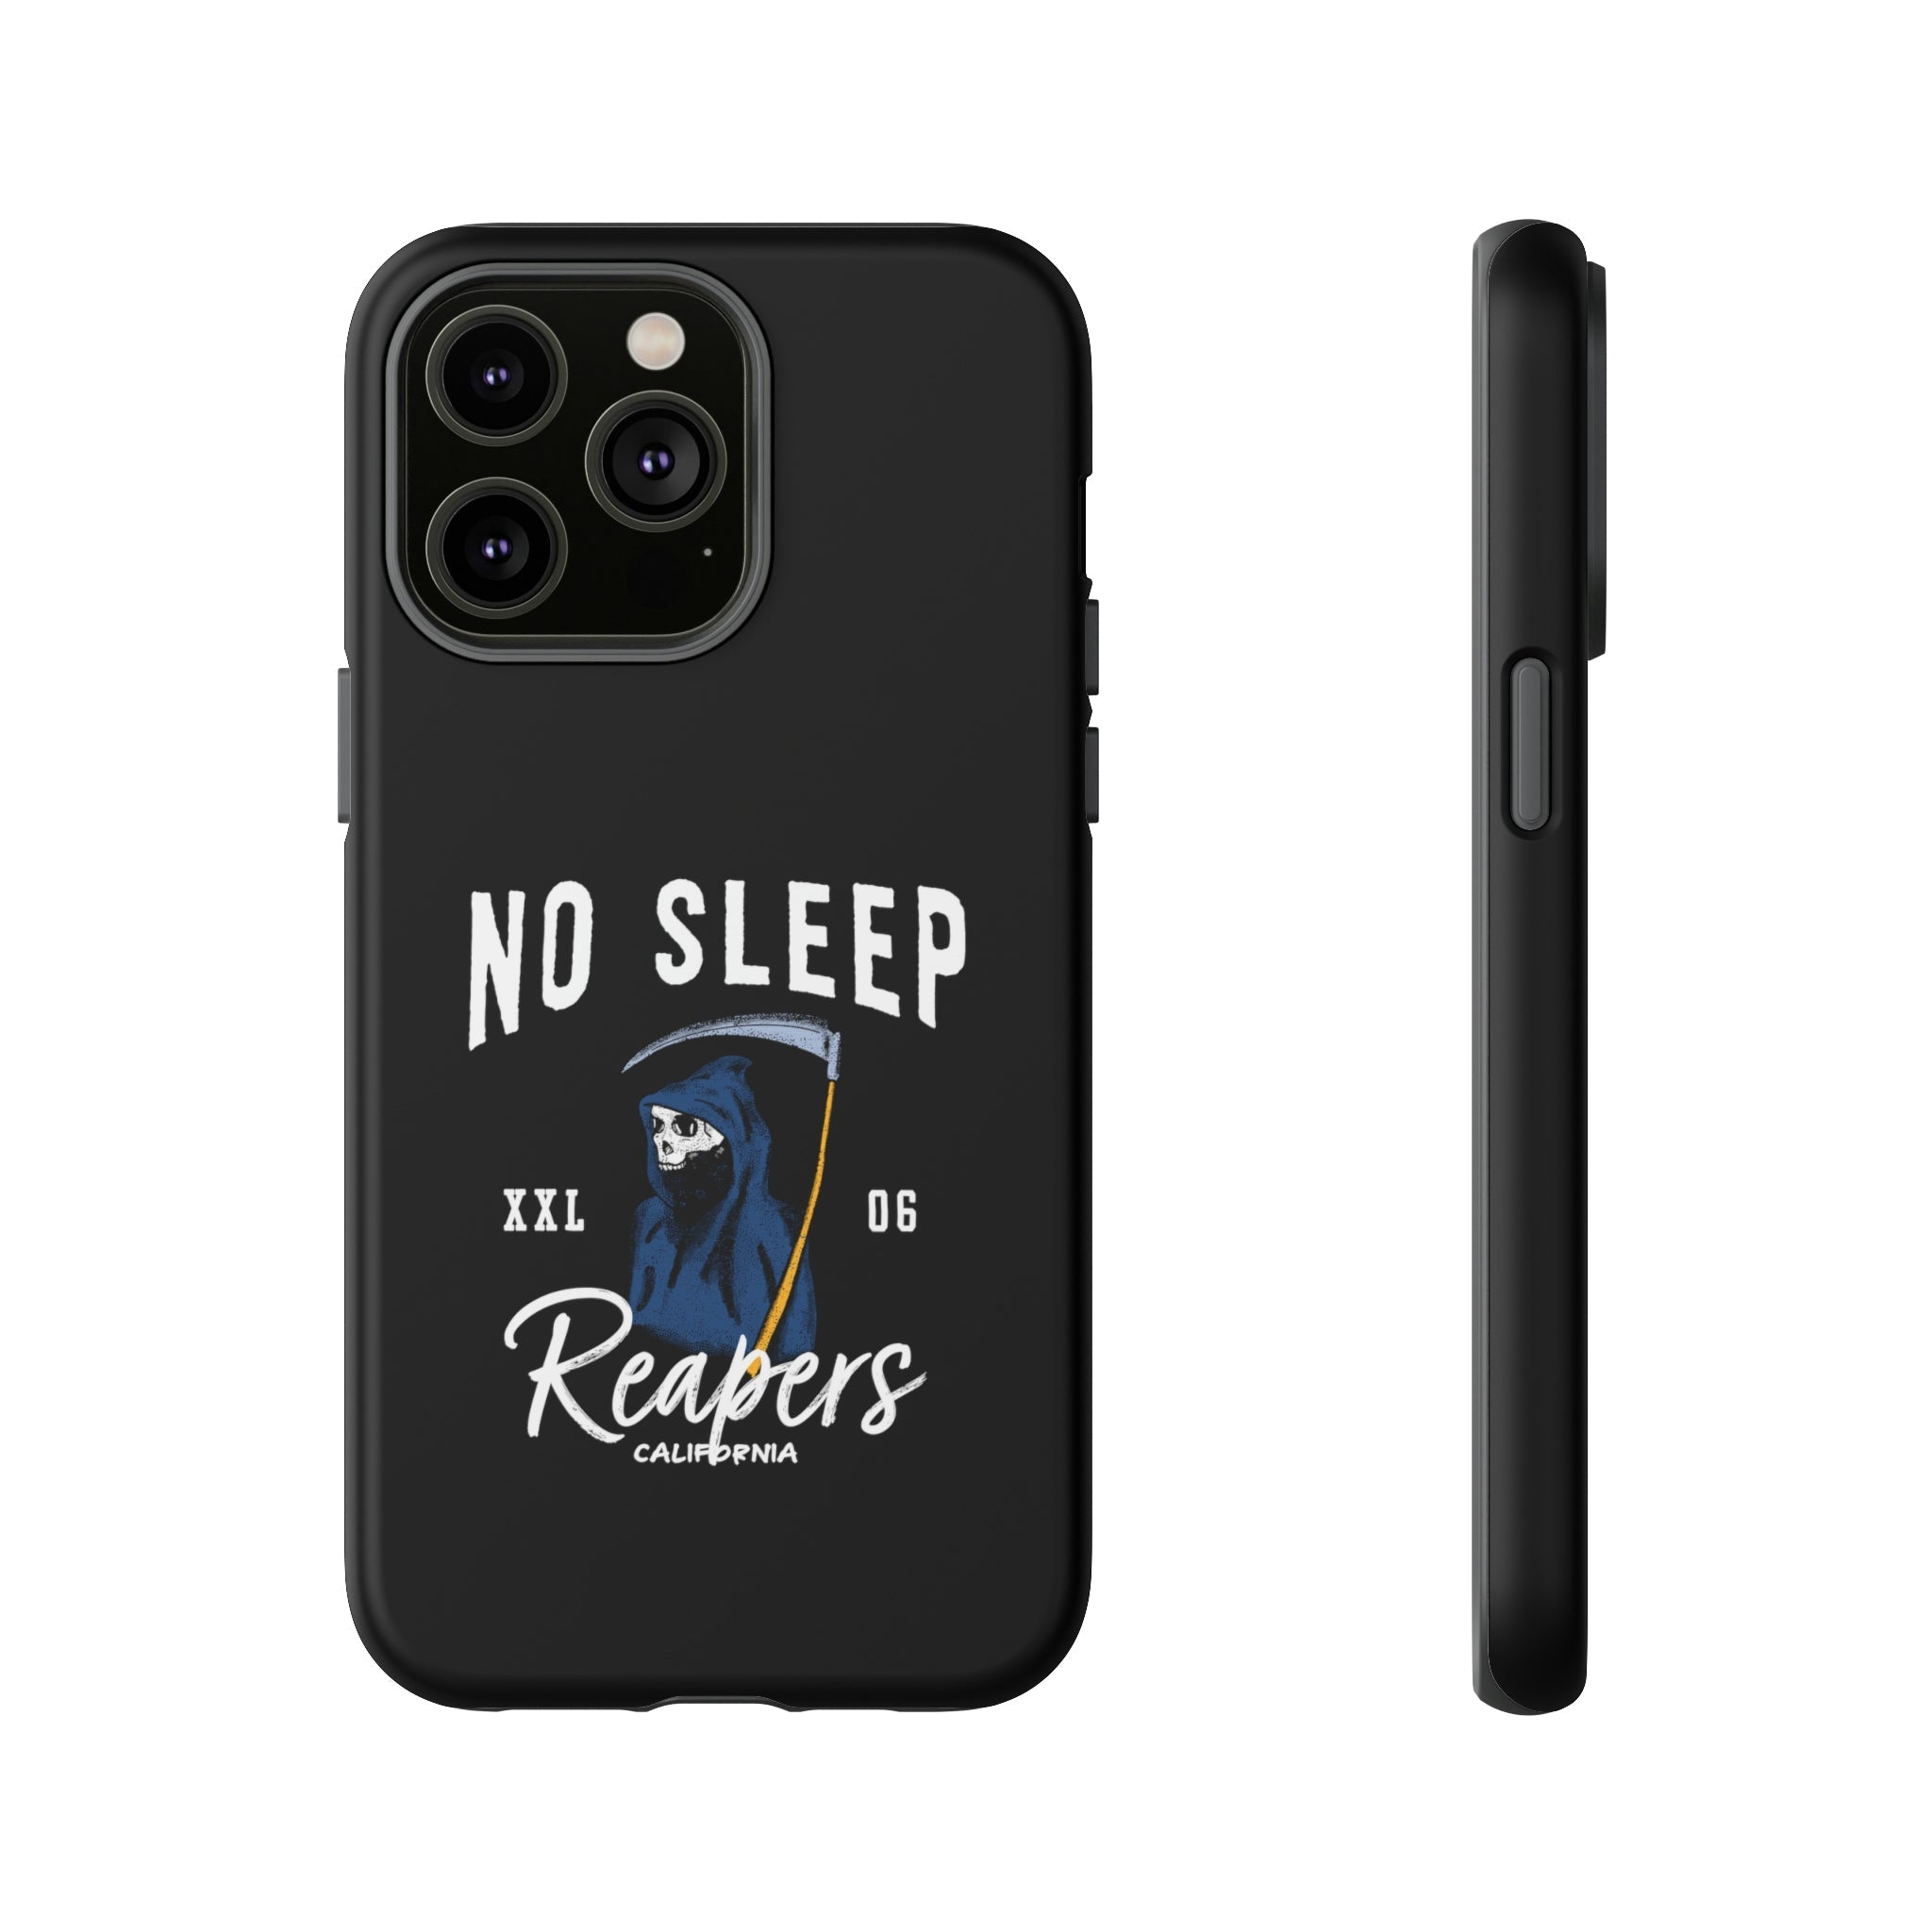 Reapers iPhone Case - NO SLEEP RECORDS - NO SLEEP RECORDS